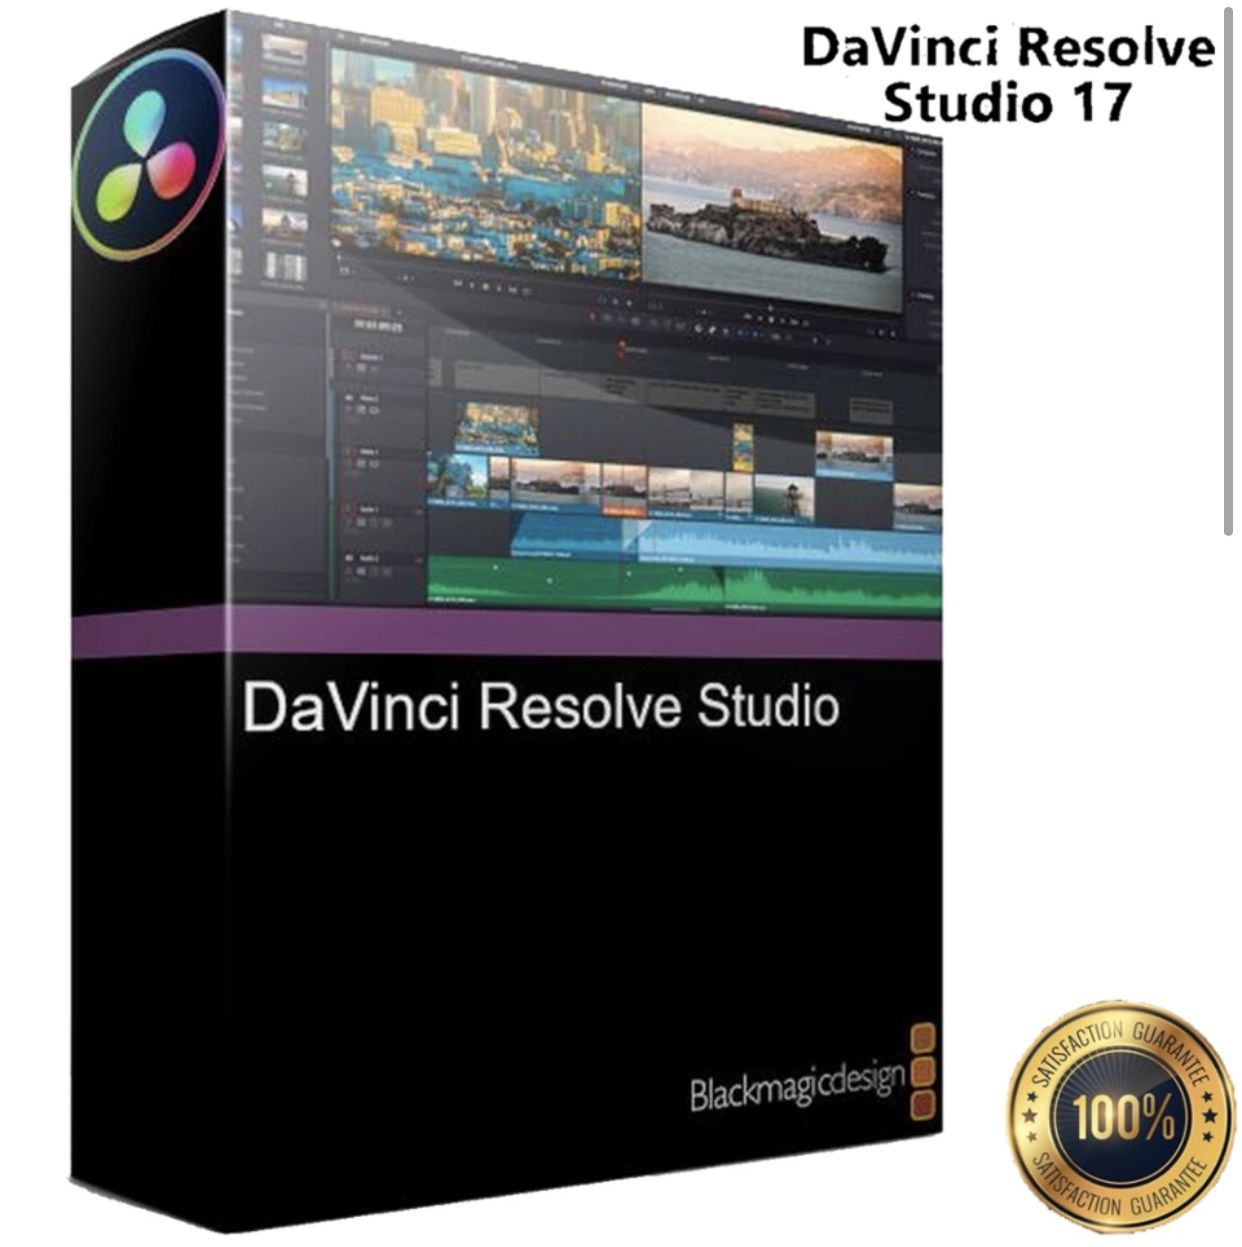 DaVinci Resolve Studio 17 Download